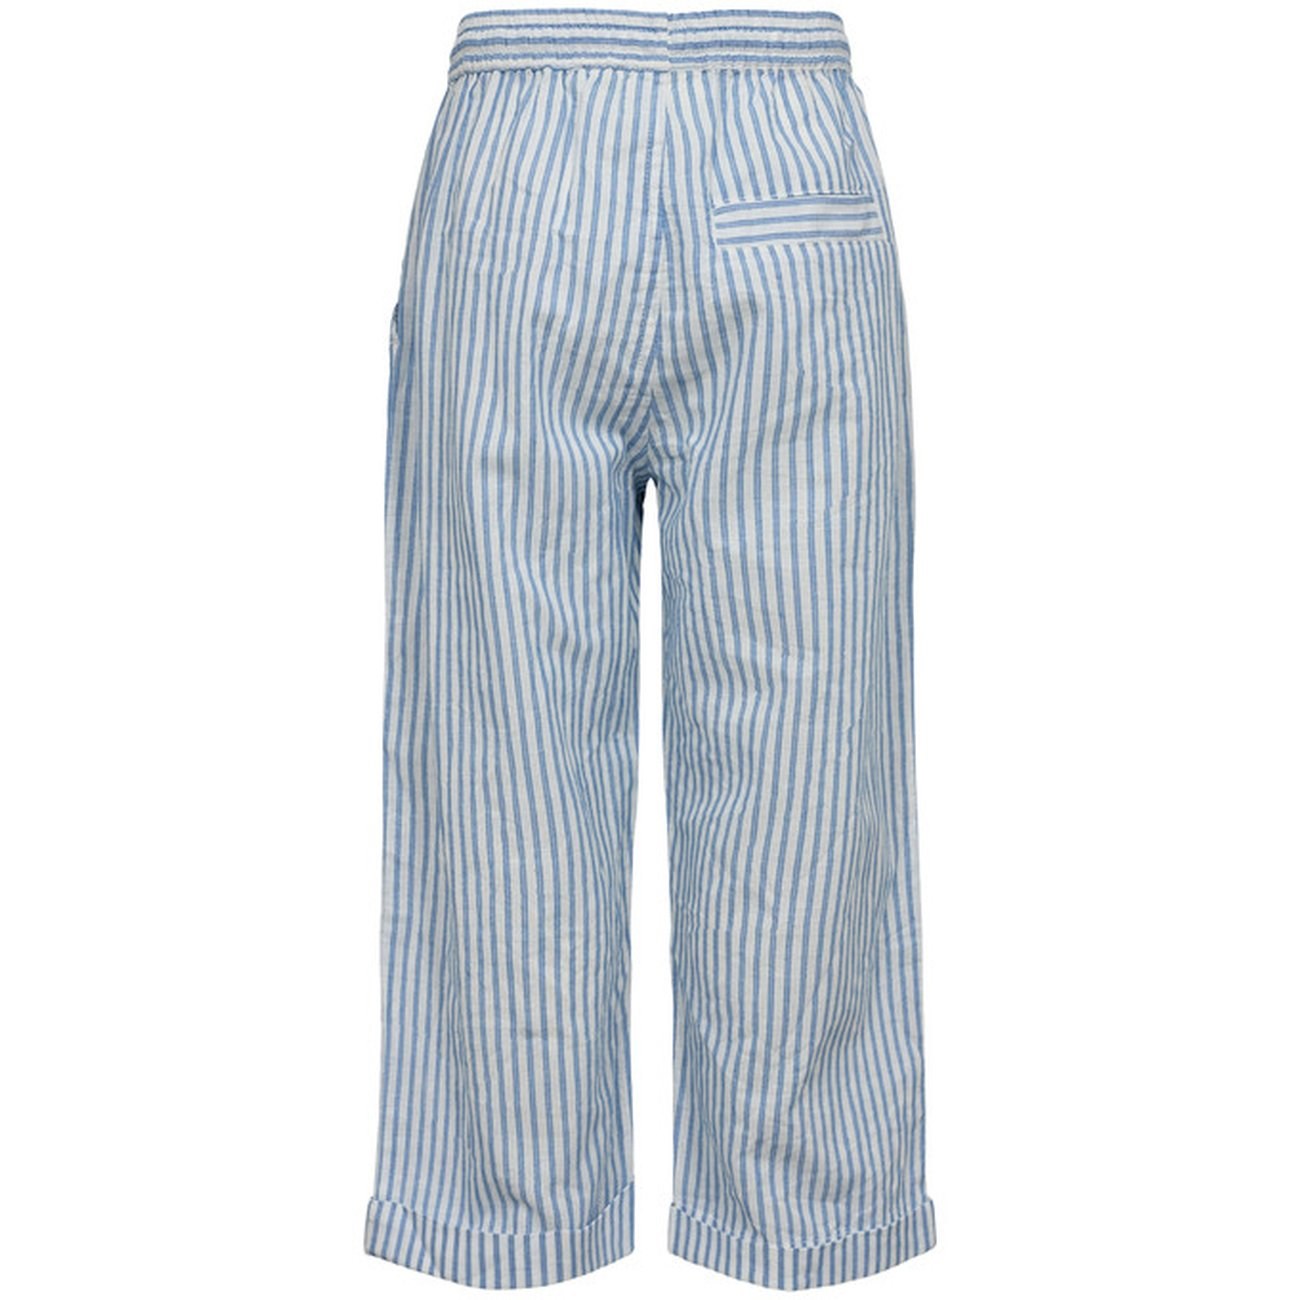 Sofie Schnoor Stripe Cotton Trousers 5